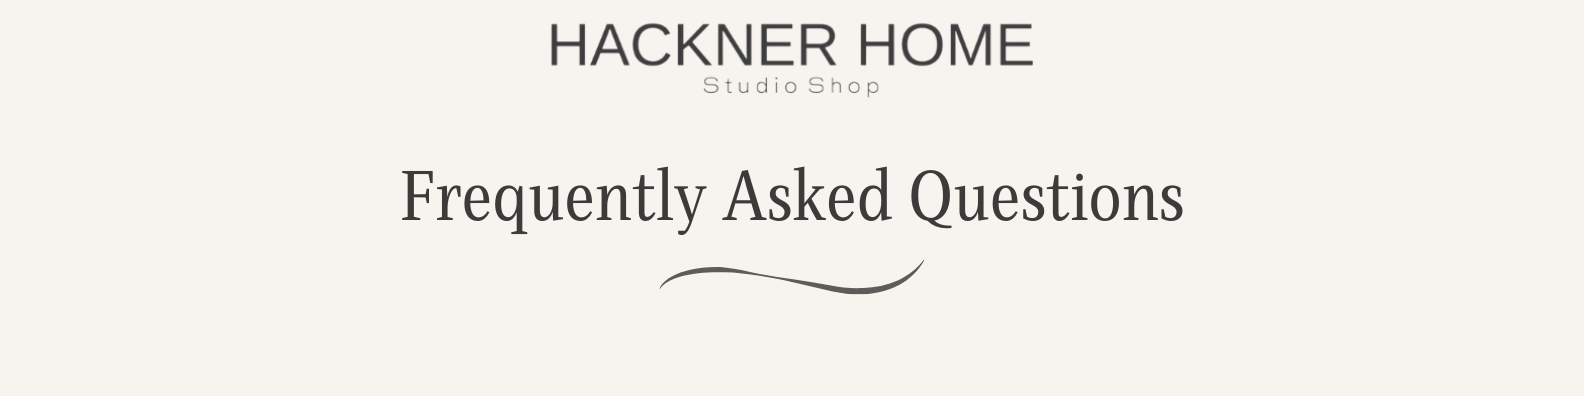 HACKNER HOME FAQ Page